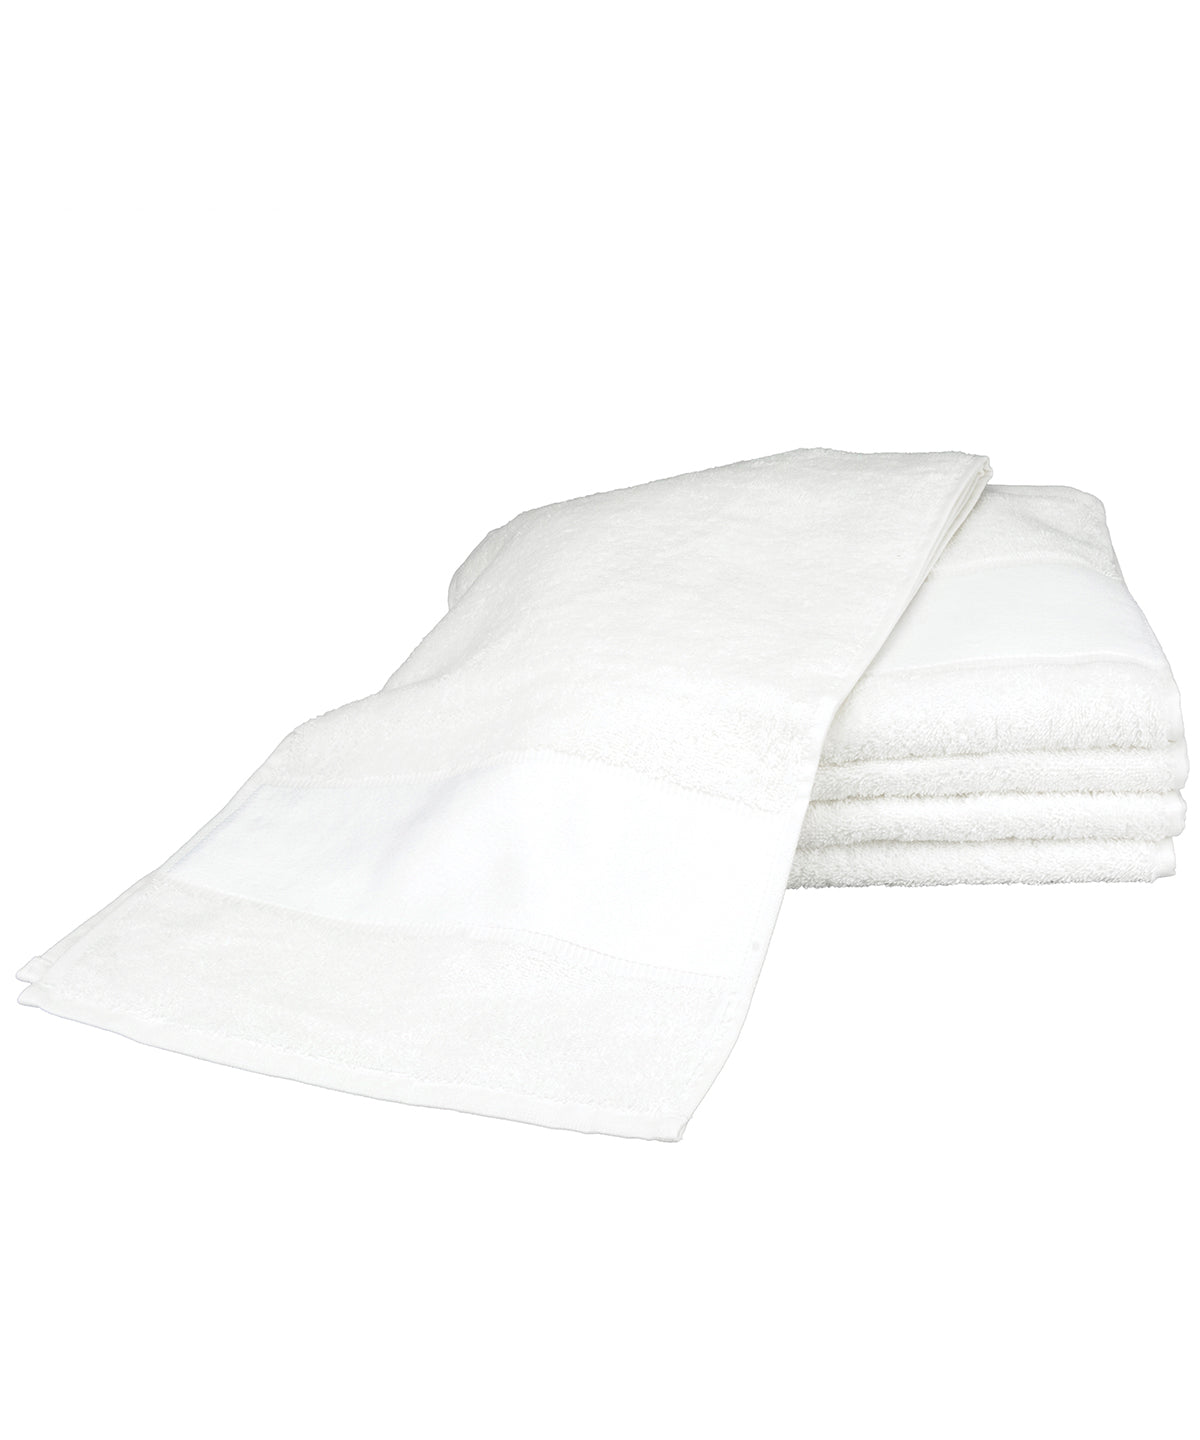 Personalised Towels - White A&R Towels ARTG® SUBLI-Me® sport towel